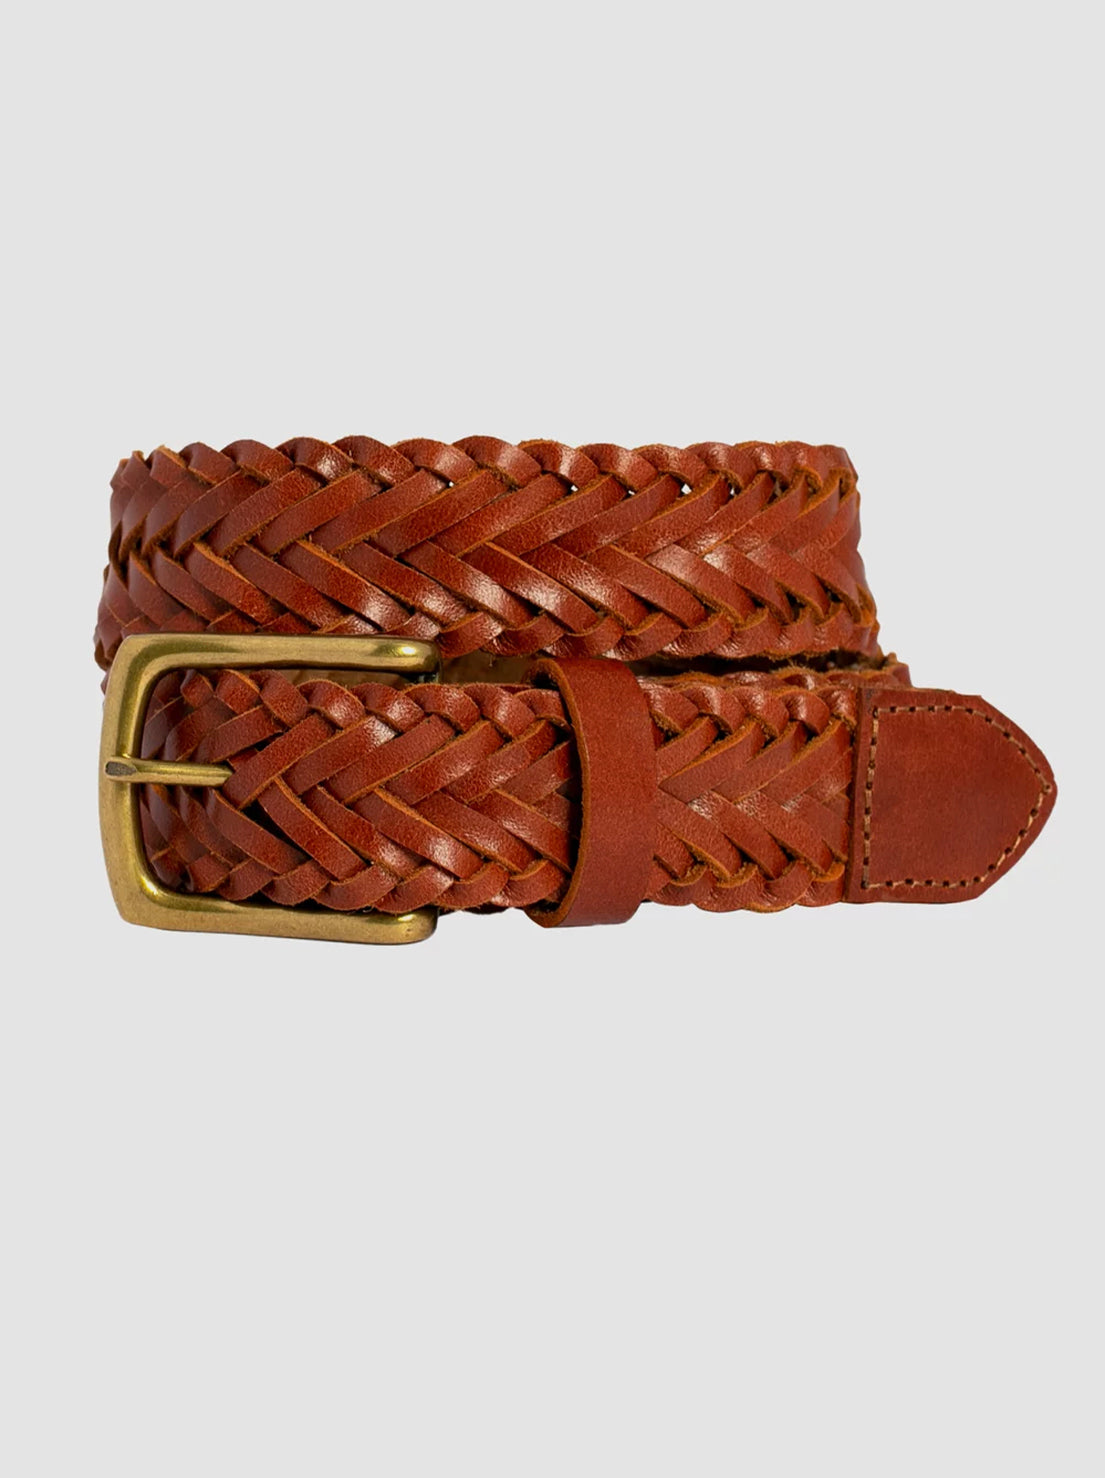 Loop Leather - Byron Braid Belt - Dark Tan